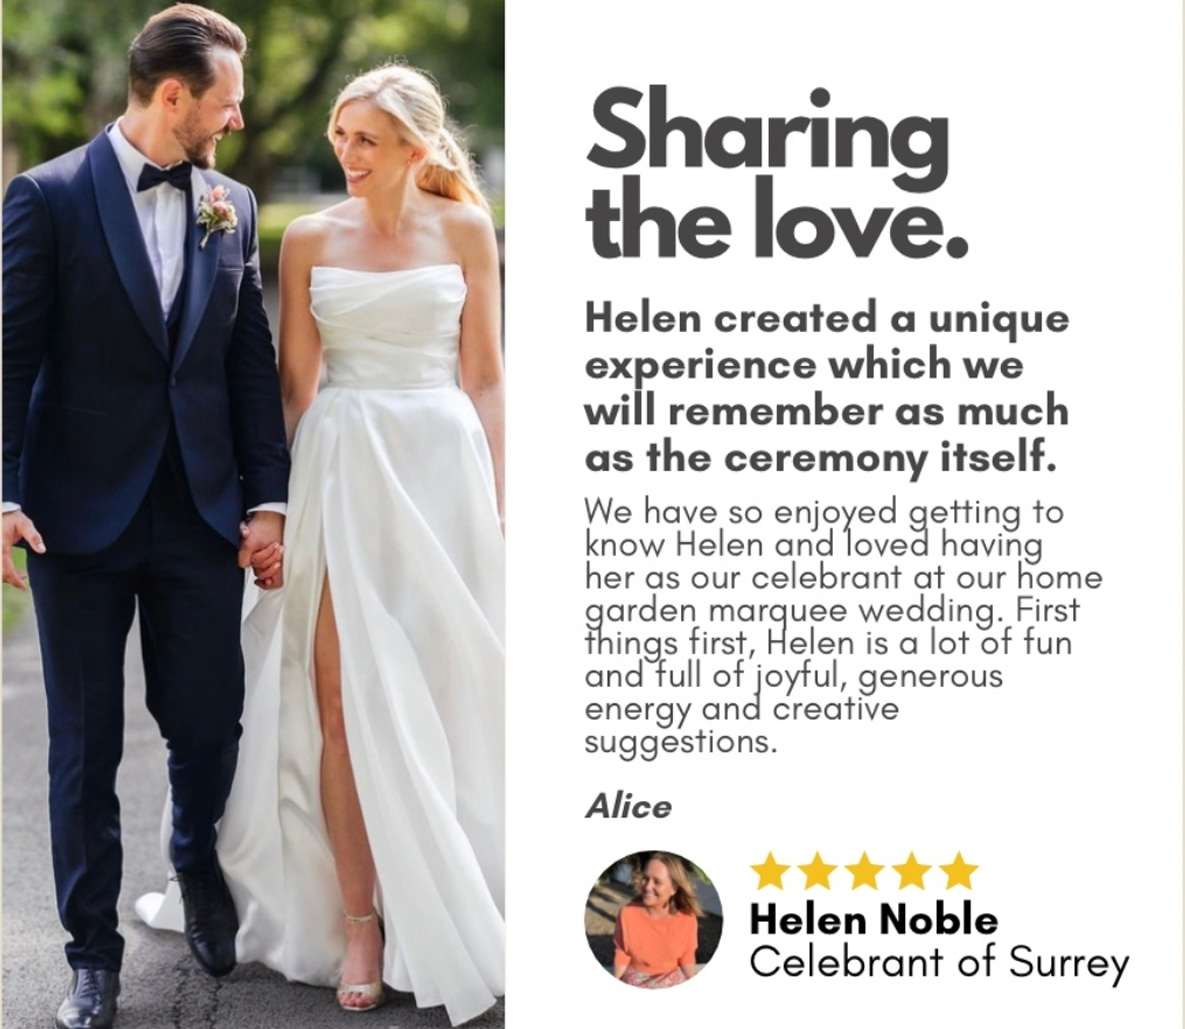 Helen Noble Celebrant of Surrey Sharing the love